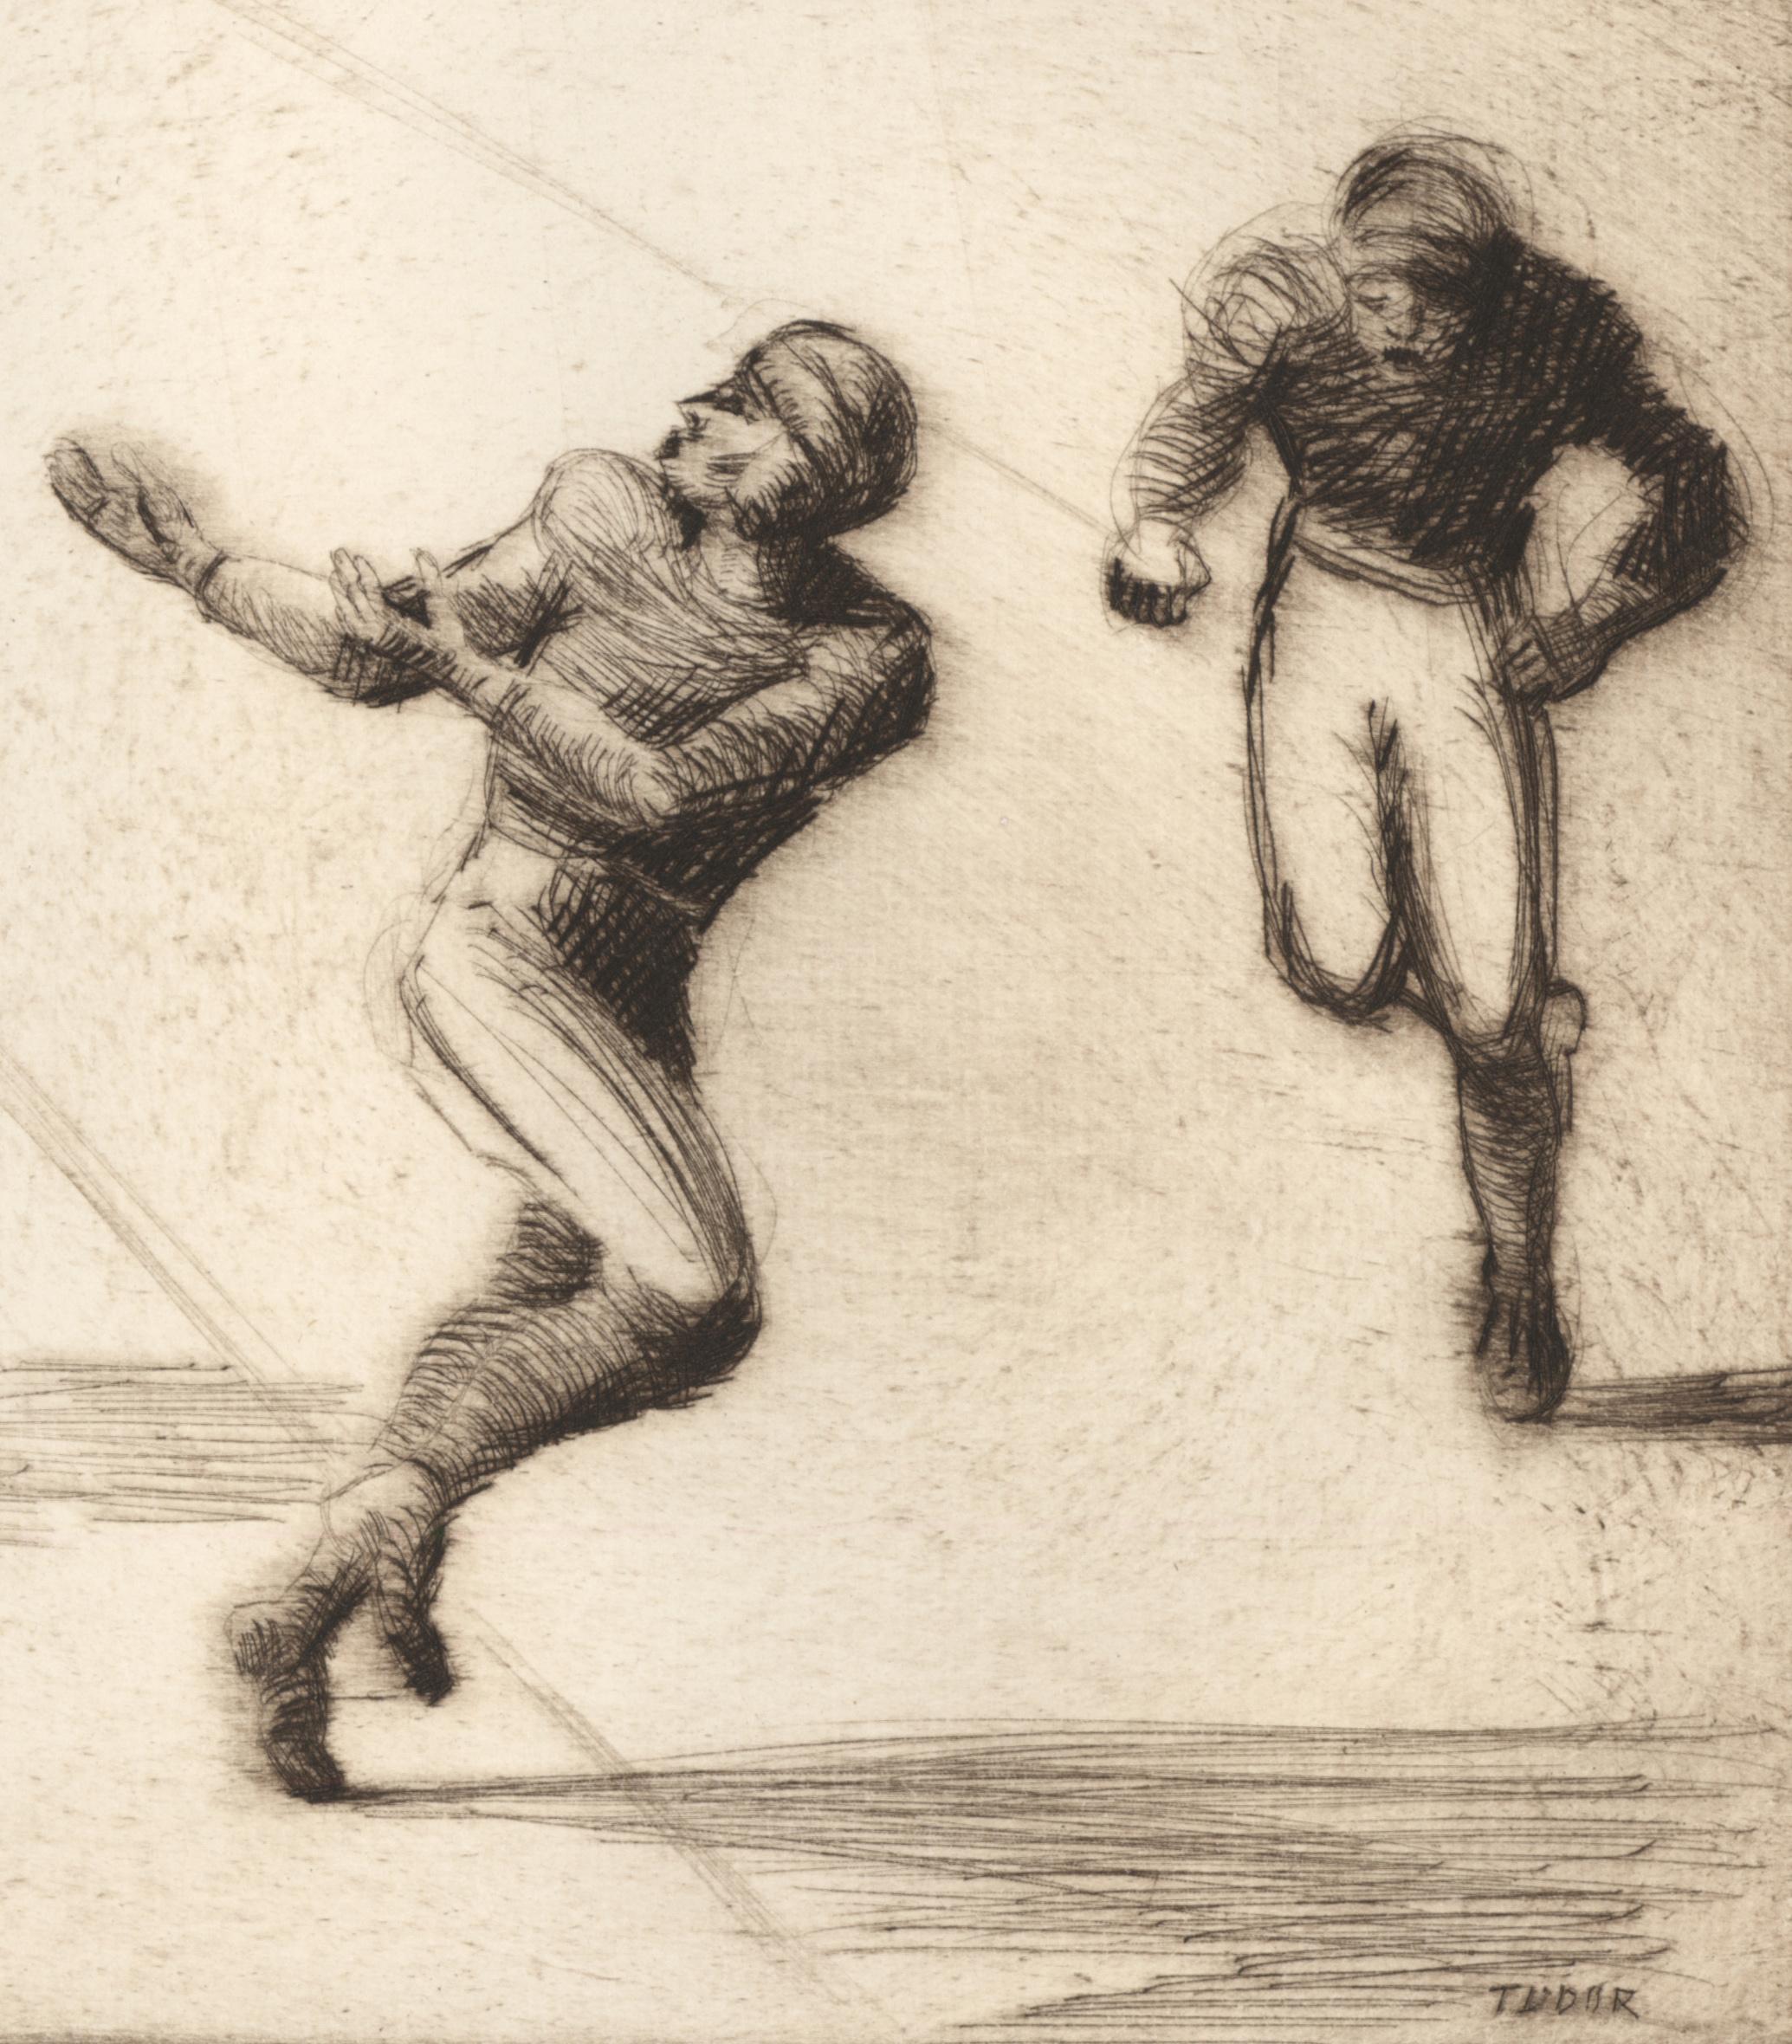 18th century football